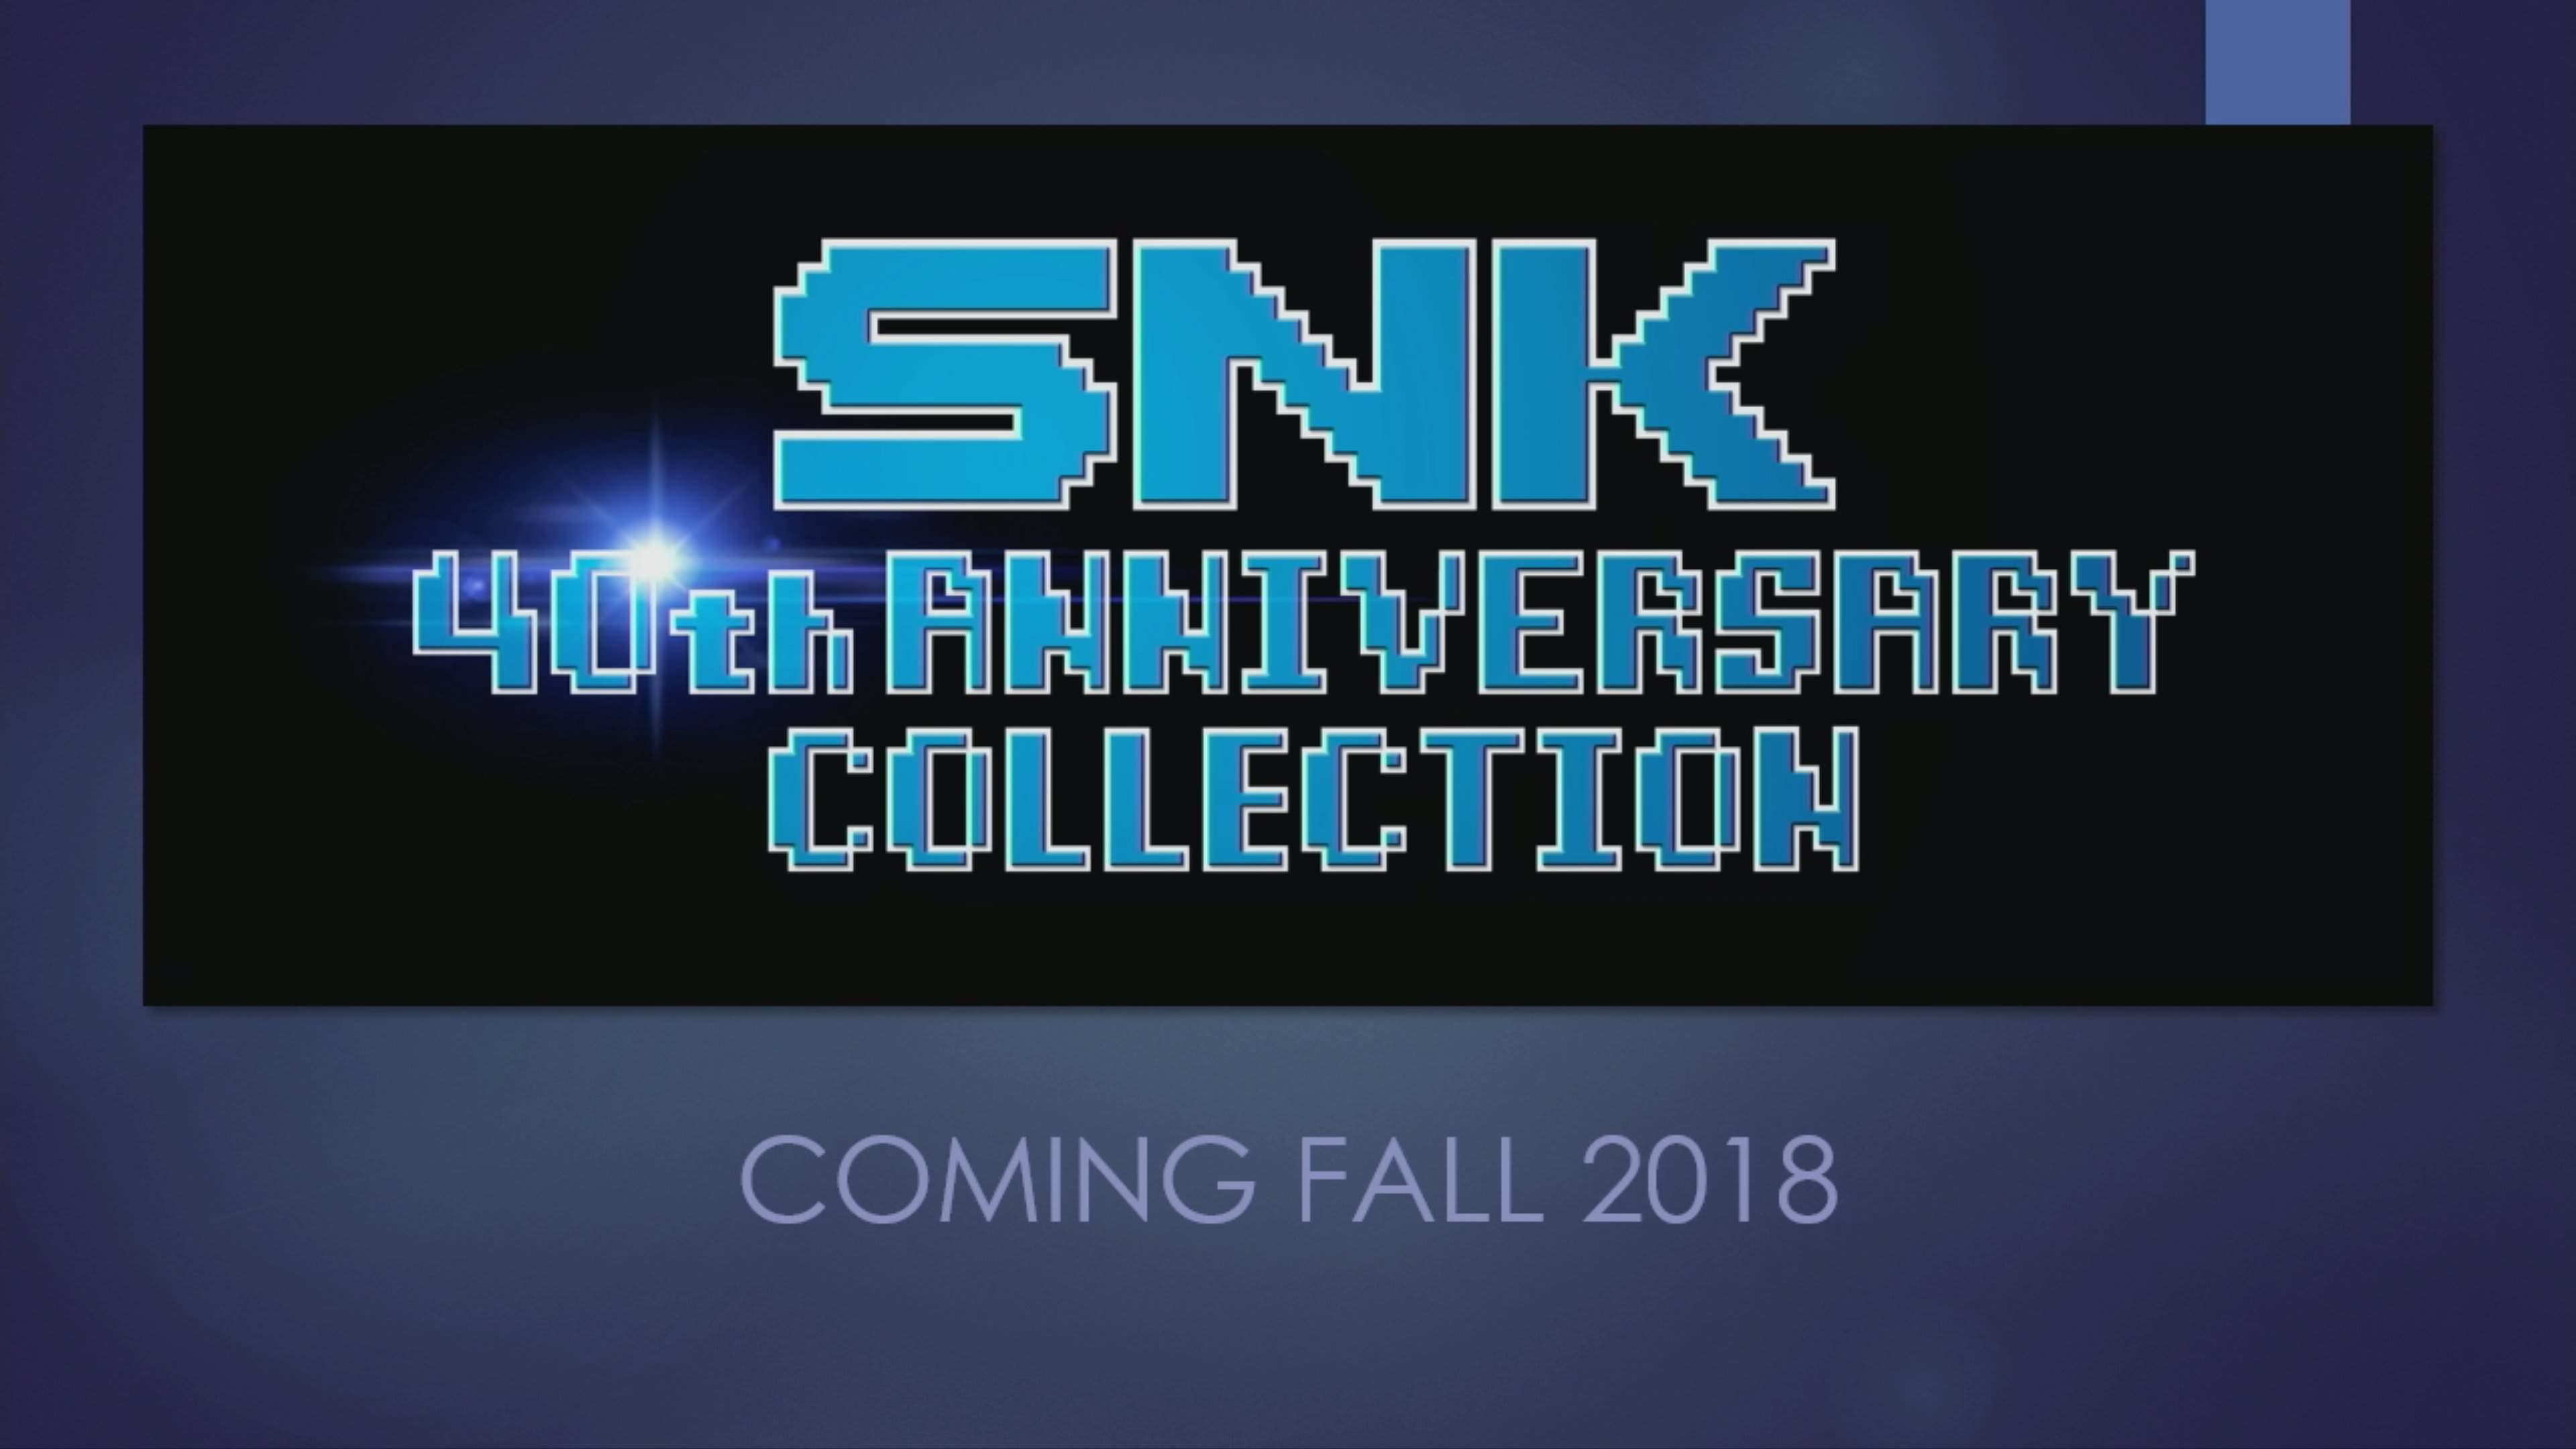 Primeros detalles de SNK 40th Anniversary Collection, que será exclusivo de Switch